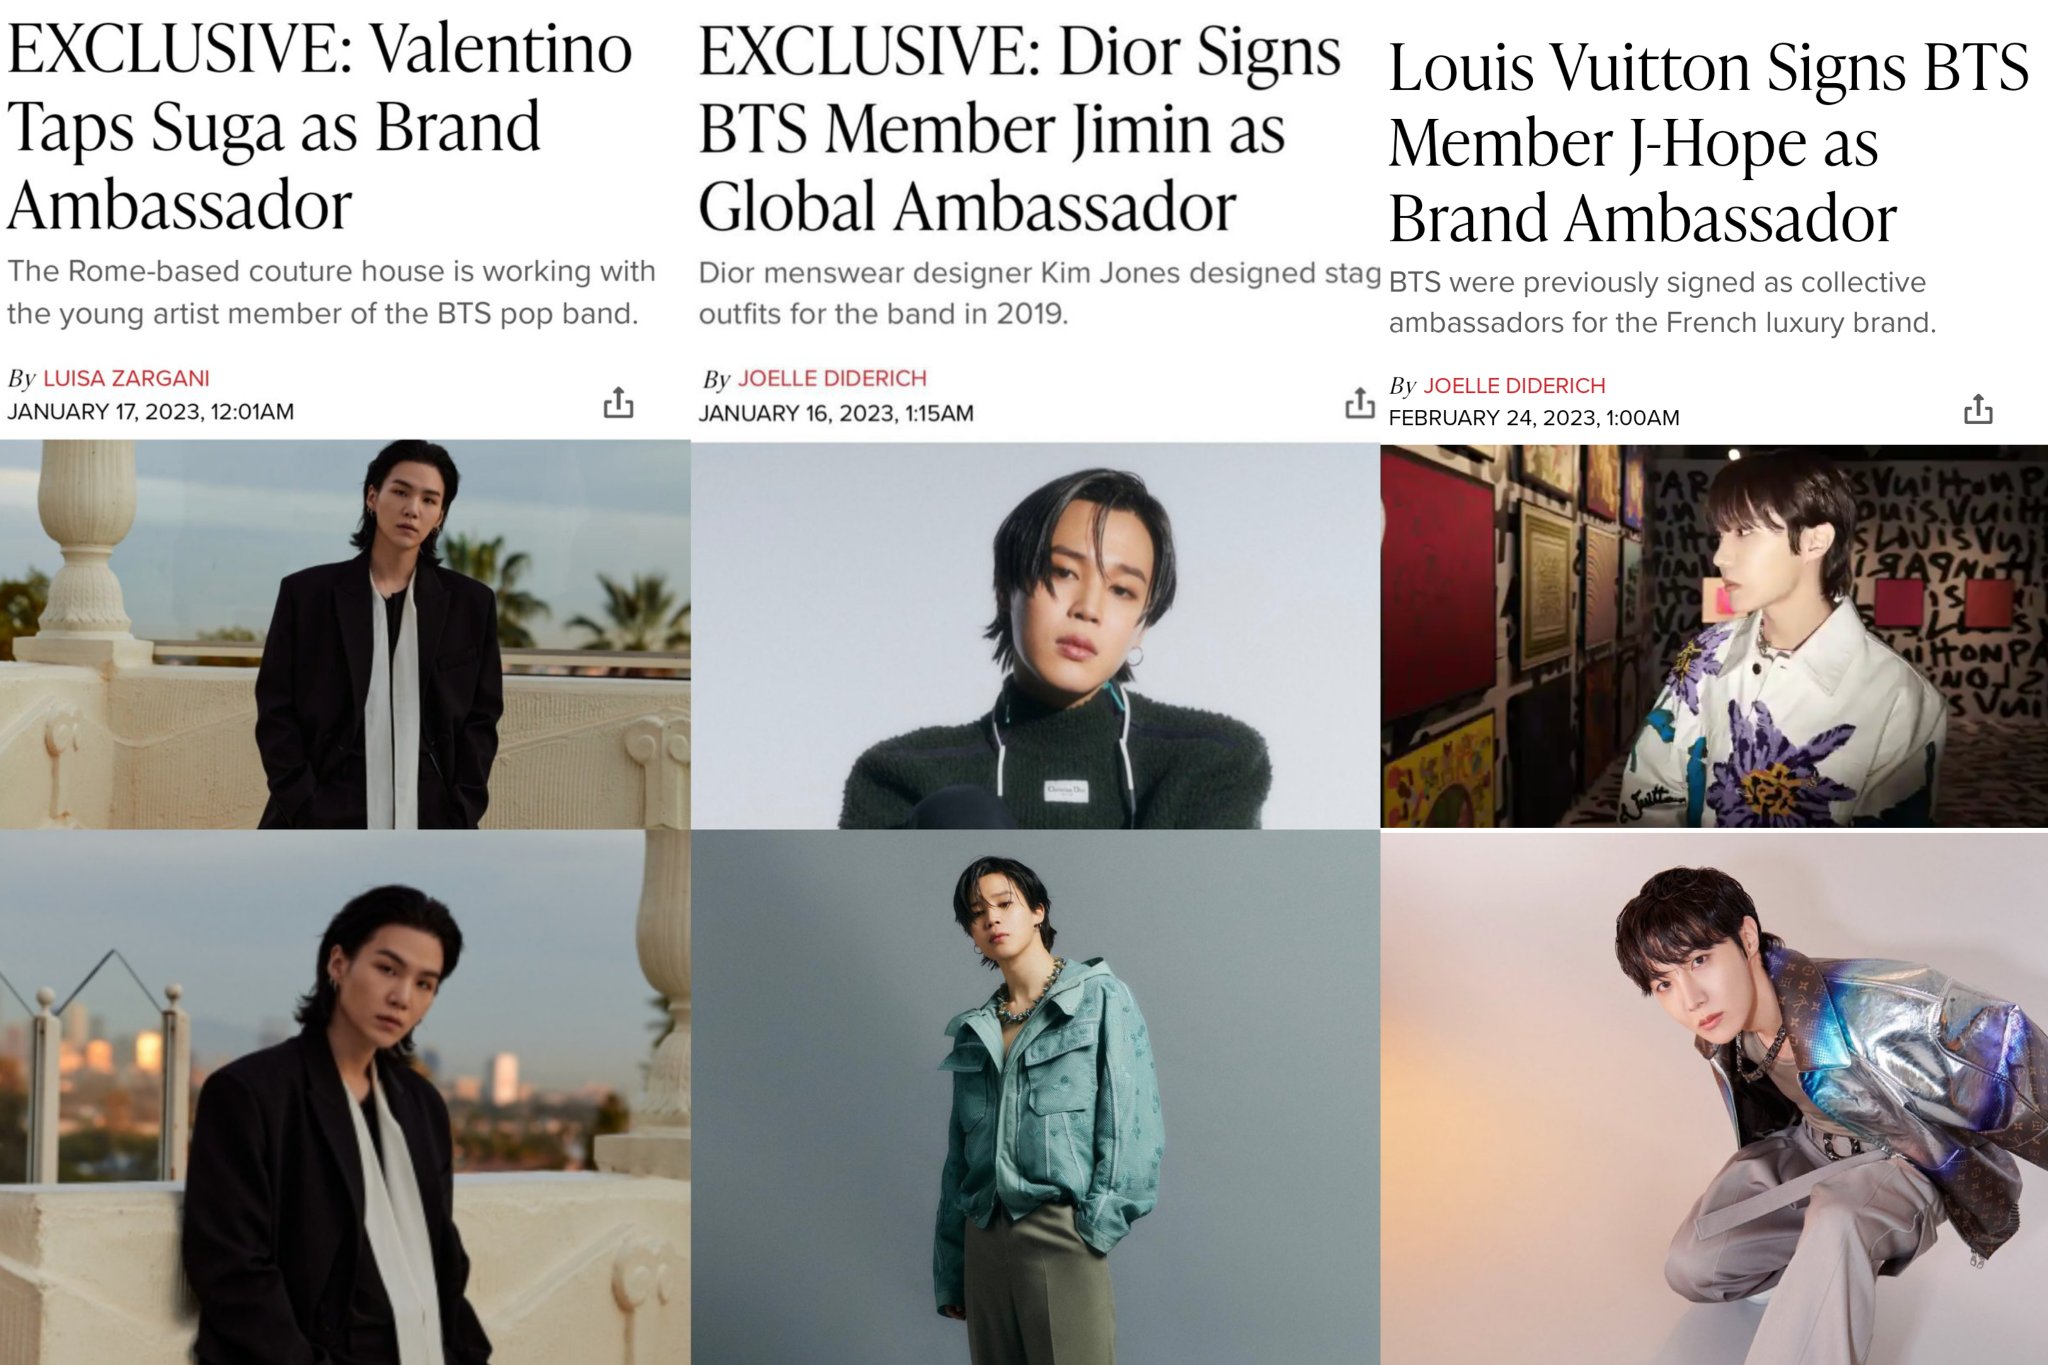 Jimin and Suga become global ambassadors of Dior and Valentino